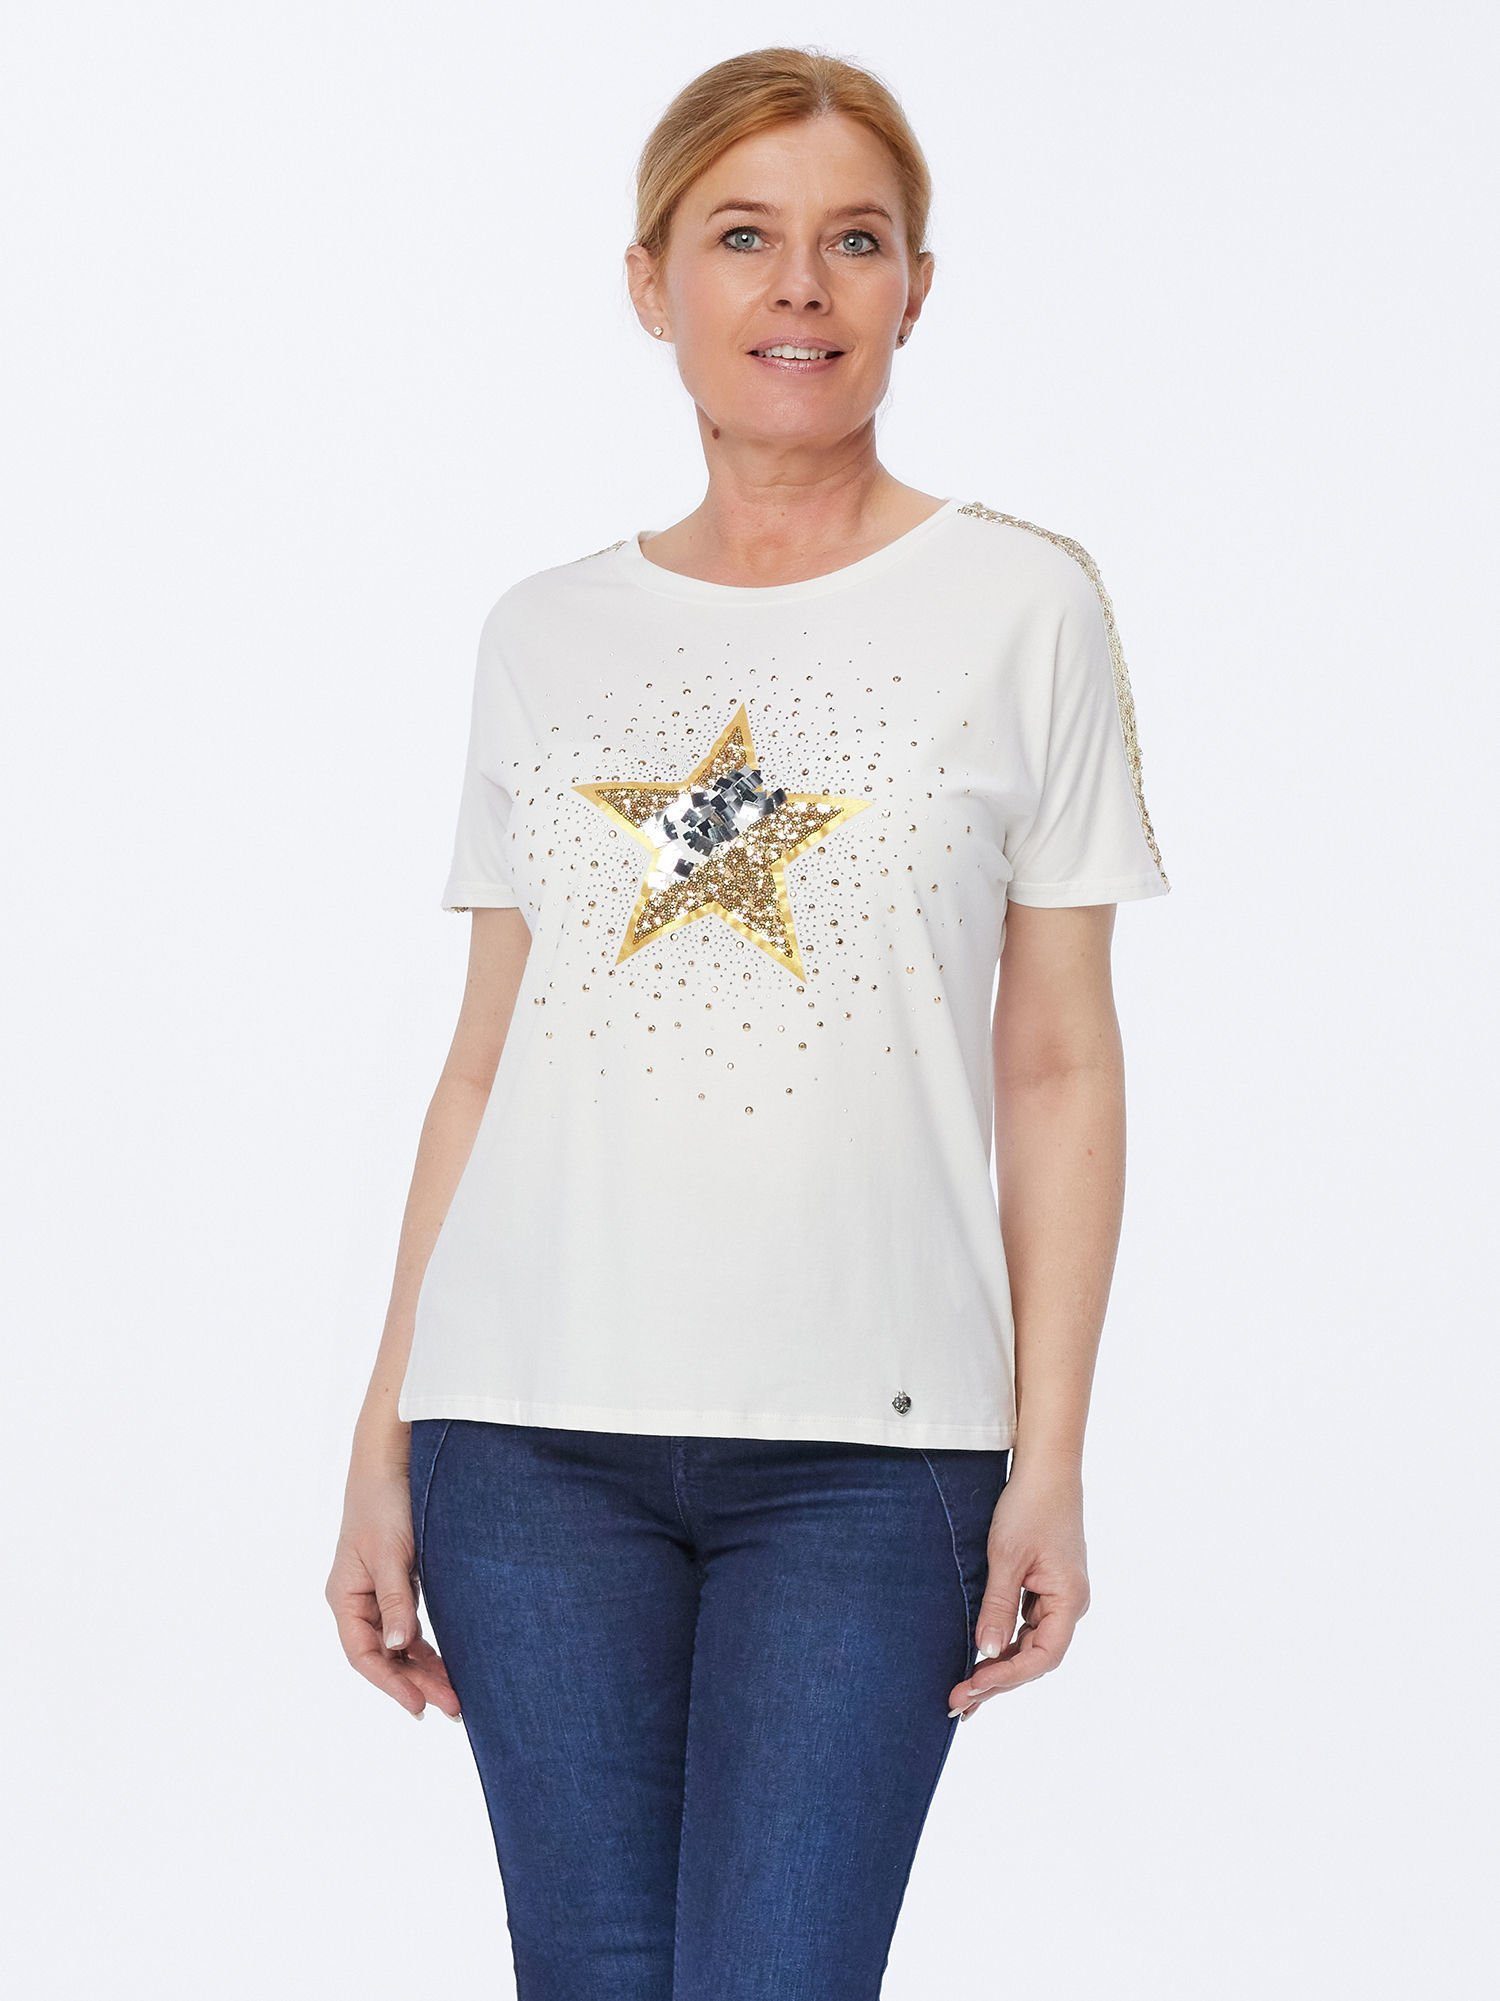 Christian Materne T-Shirt Kurzarmbluse mit Stern-Motiv weiß